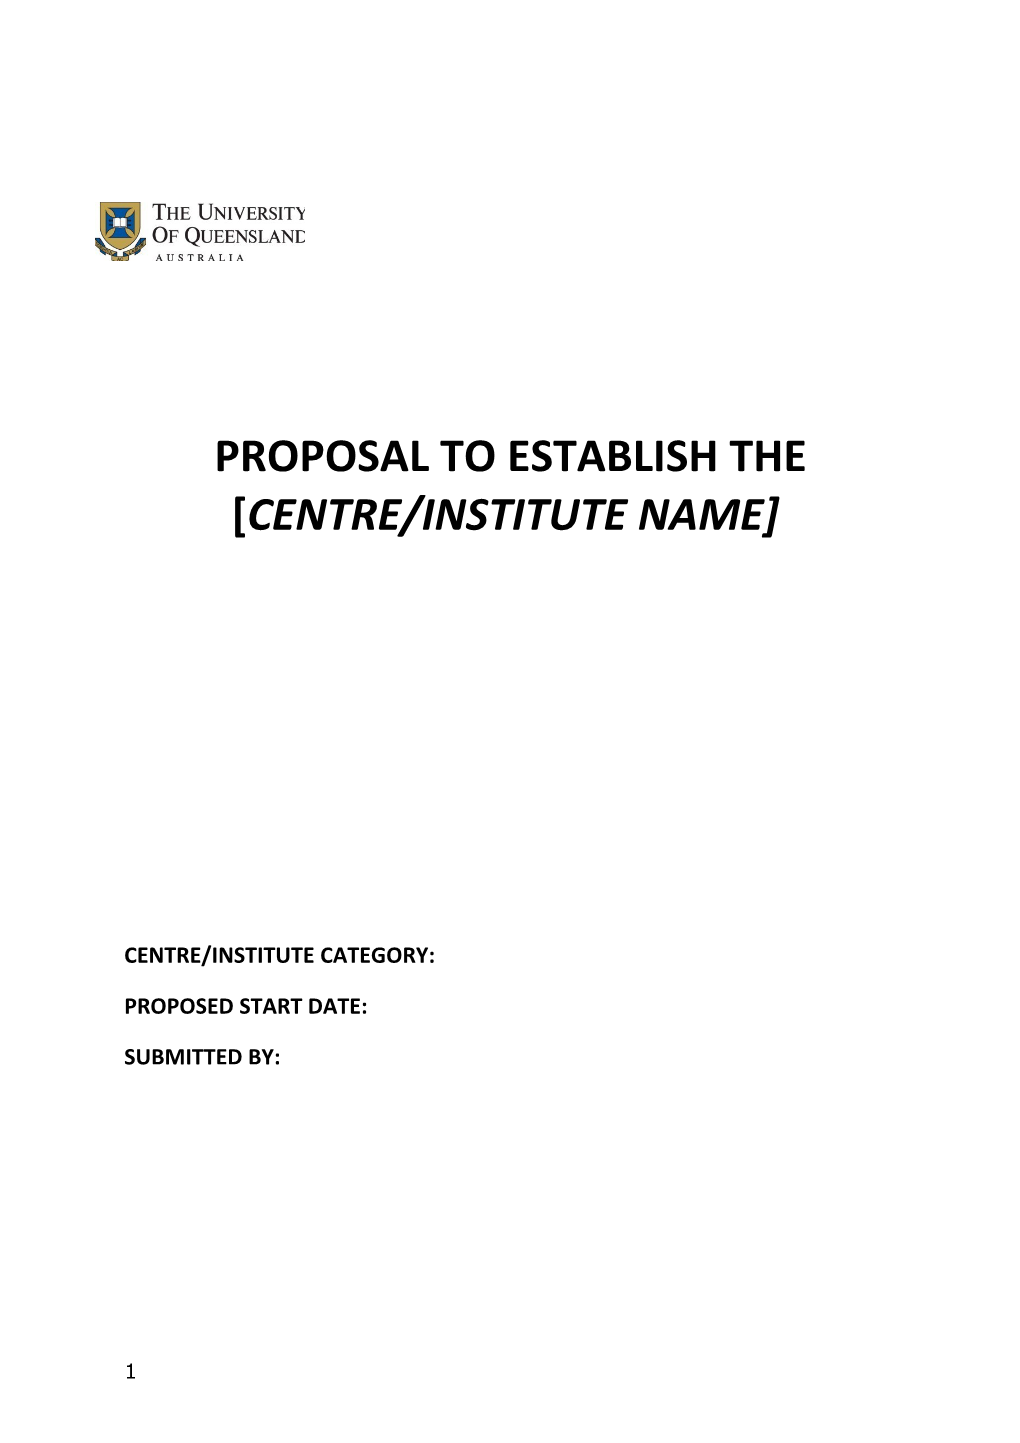 Proposal to Establish the Centre/Institute Name